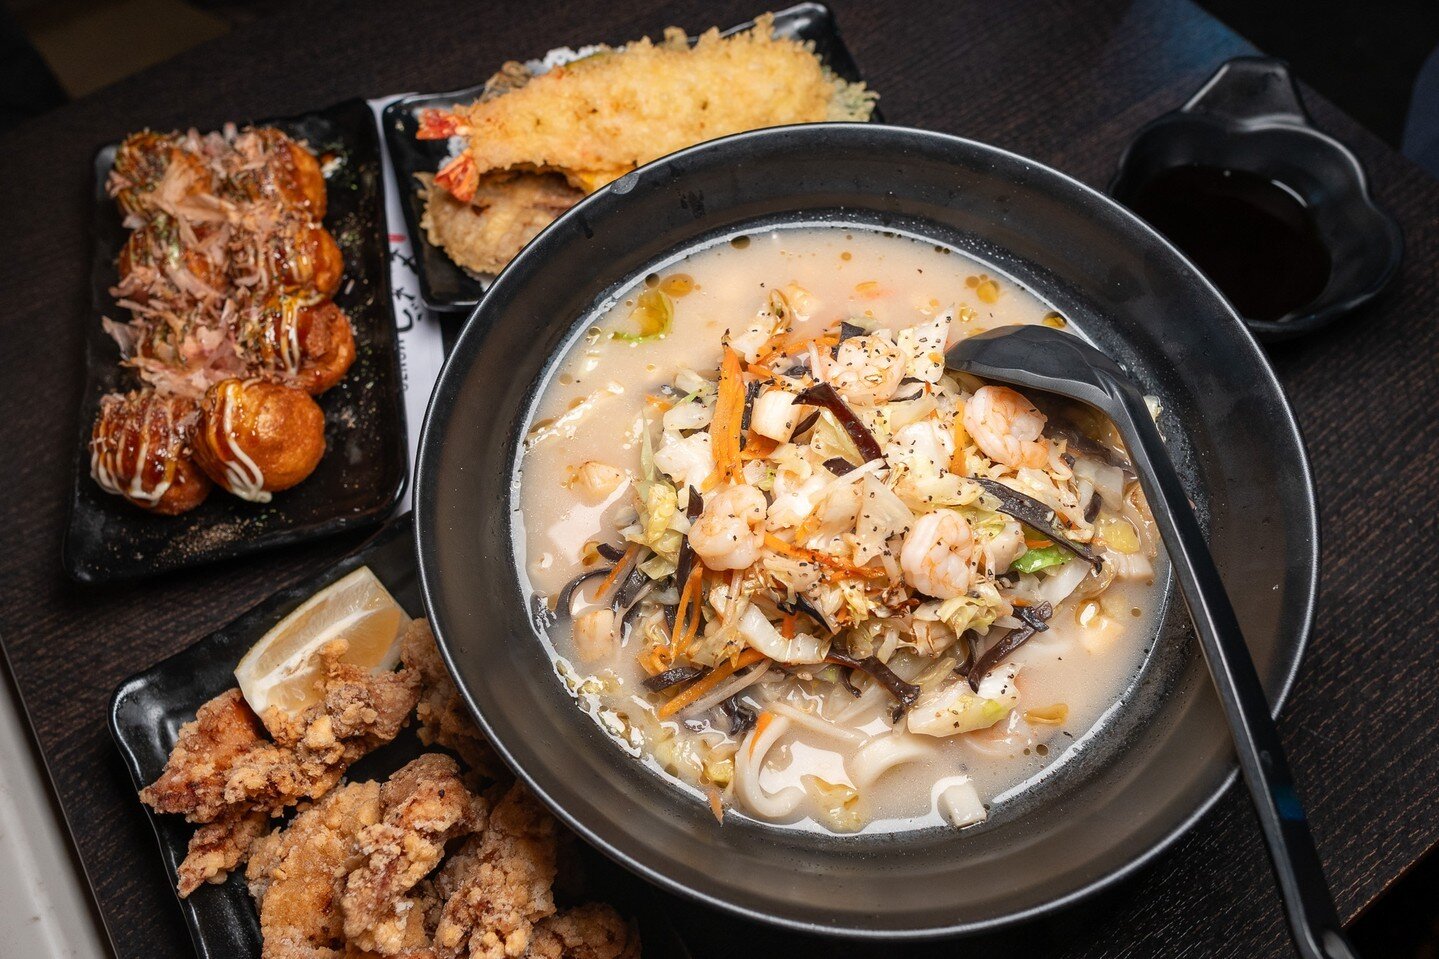 Udon cravings satisfied! Who else loves these thick, chewy noodles? ITADAKIMASU!  #FoodieFindsLA 🍜😍

👇 Freshly homemade noodles 

◾️◽️◾️◽️◾️◽️◾️◽️◾️◽️
🍜 ᴍᴀʀᴜɢᴀᴍᴇ ᴍᴏɴᴢᴏ ʟᴀ
⏰ ᴍᴏɴ - ᴛʜᴜʀꜱ : 11:30 ᴀᴍ - 9:00 ᴘᴍ 
⏰ ꜰʀɪ - ꜱᴜɴ: 11:30 ᴀᴍ - 10:00 ᴘᴍ
📍 329